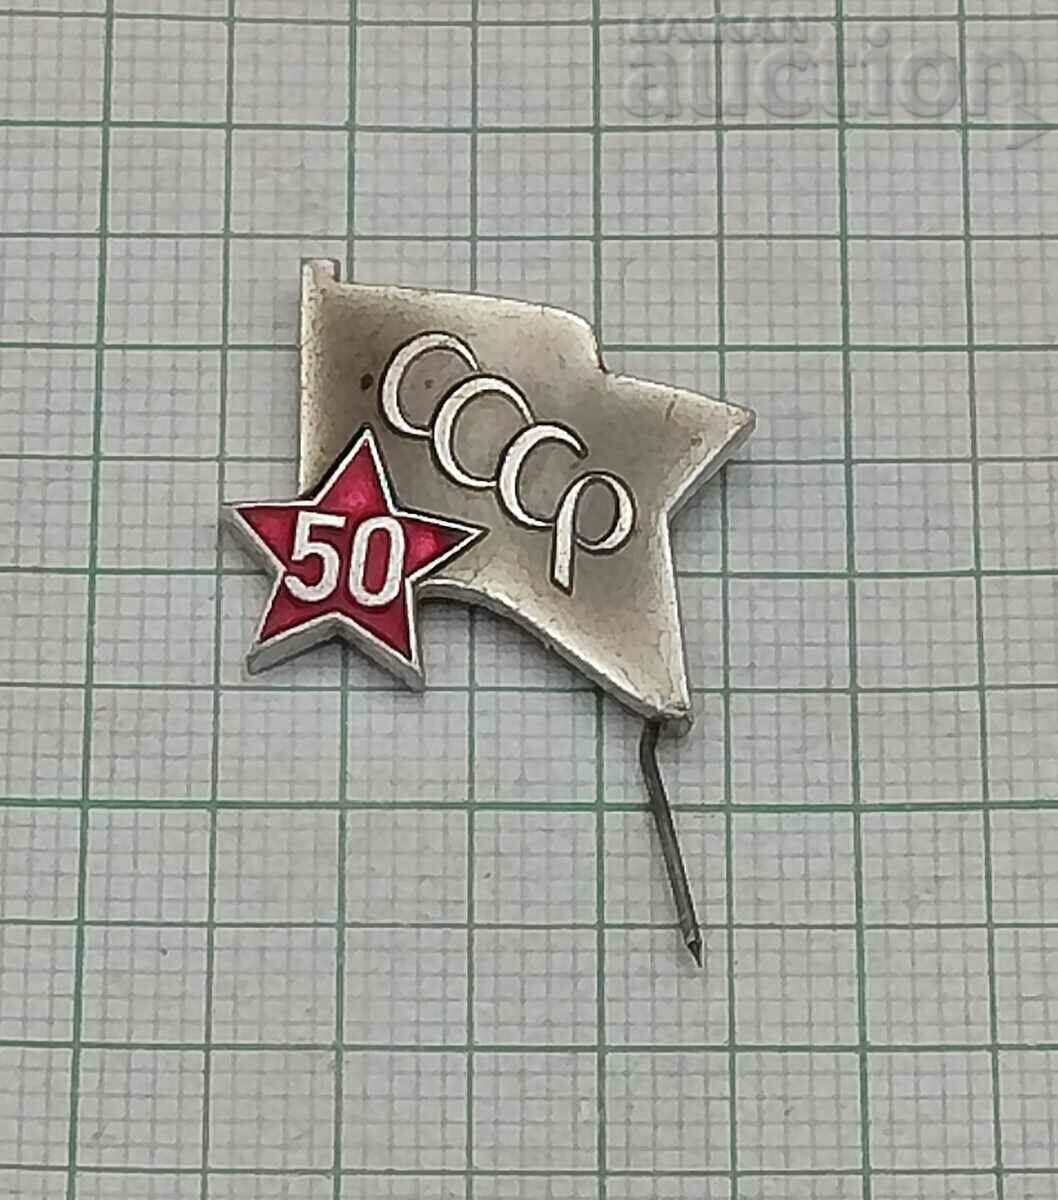 URSS 50 de ani 1967 BADGE